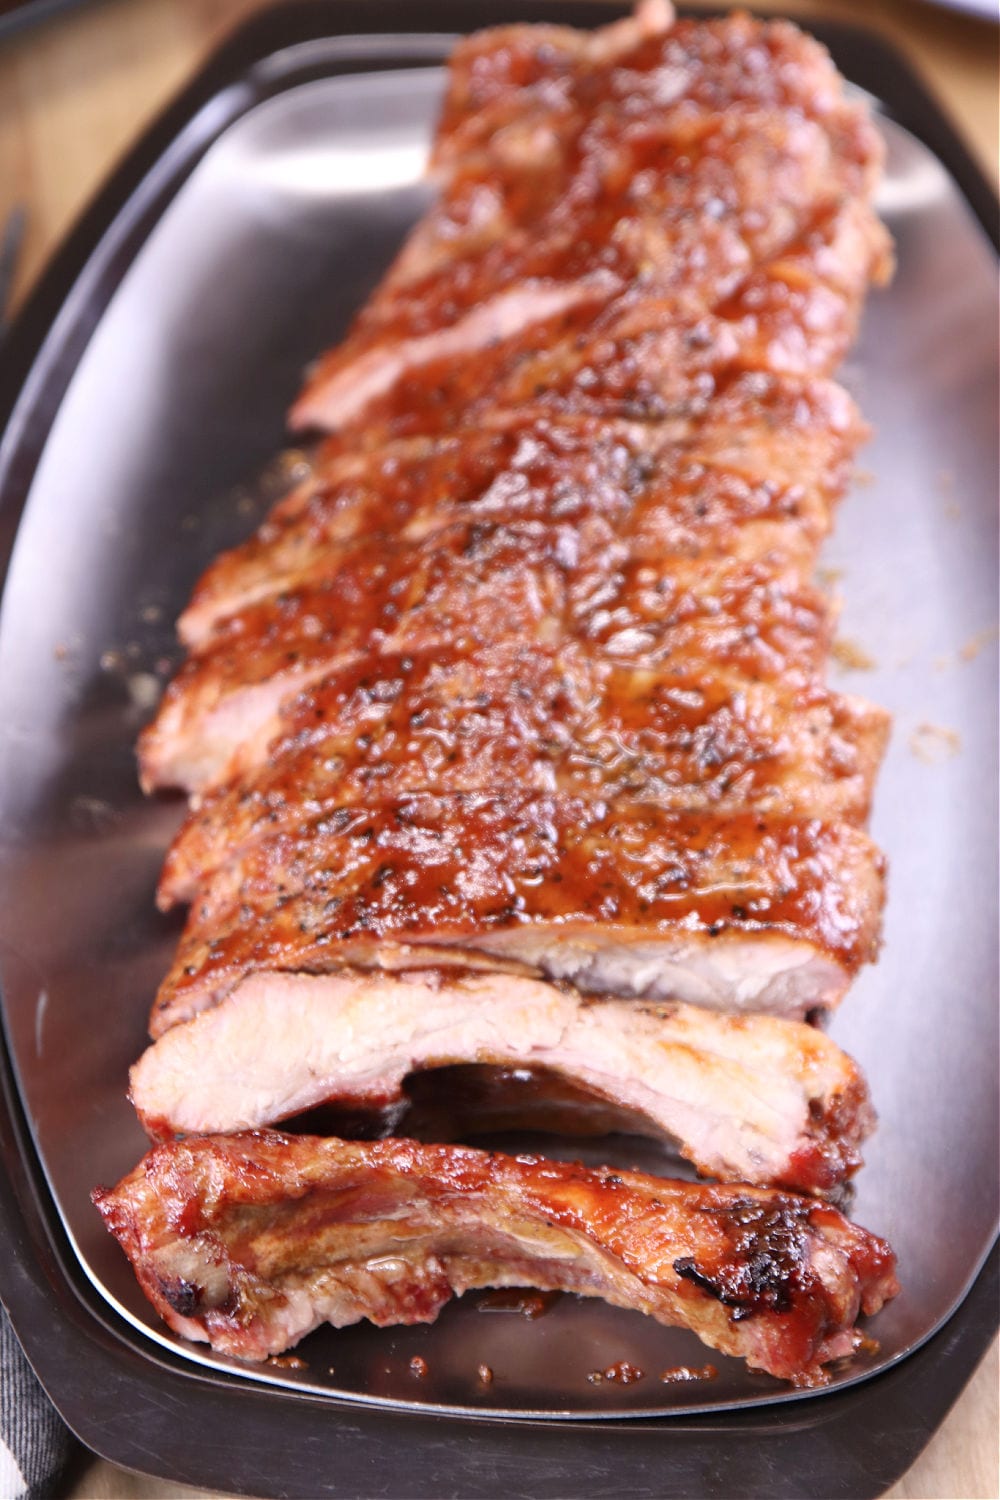 Tray of maple bbq ribs, sliced